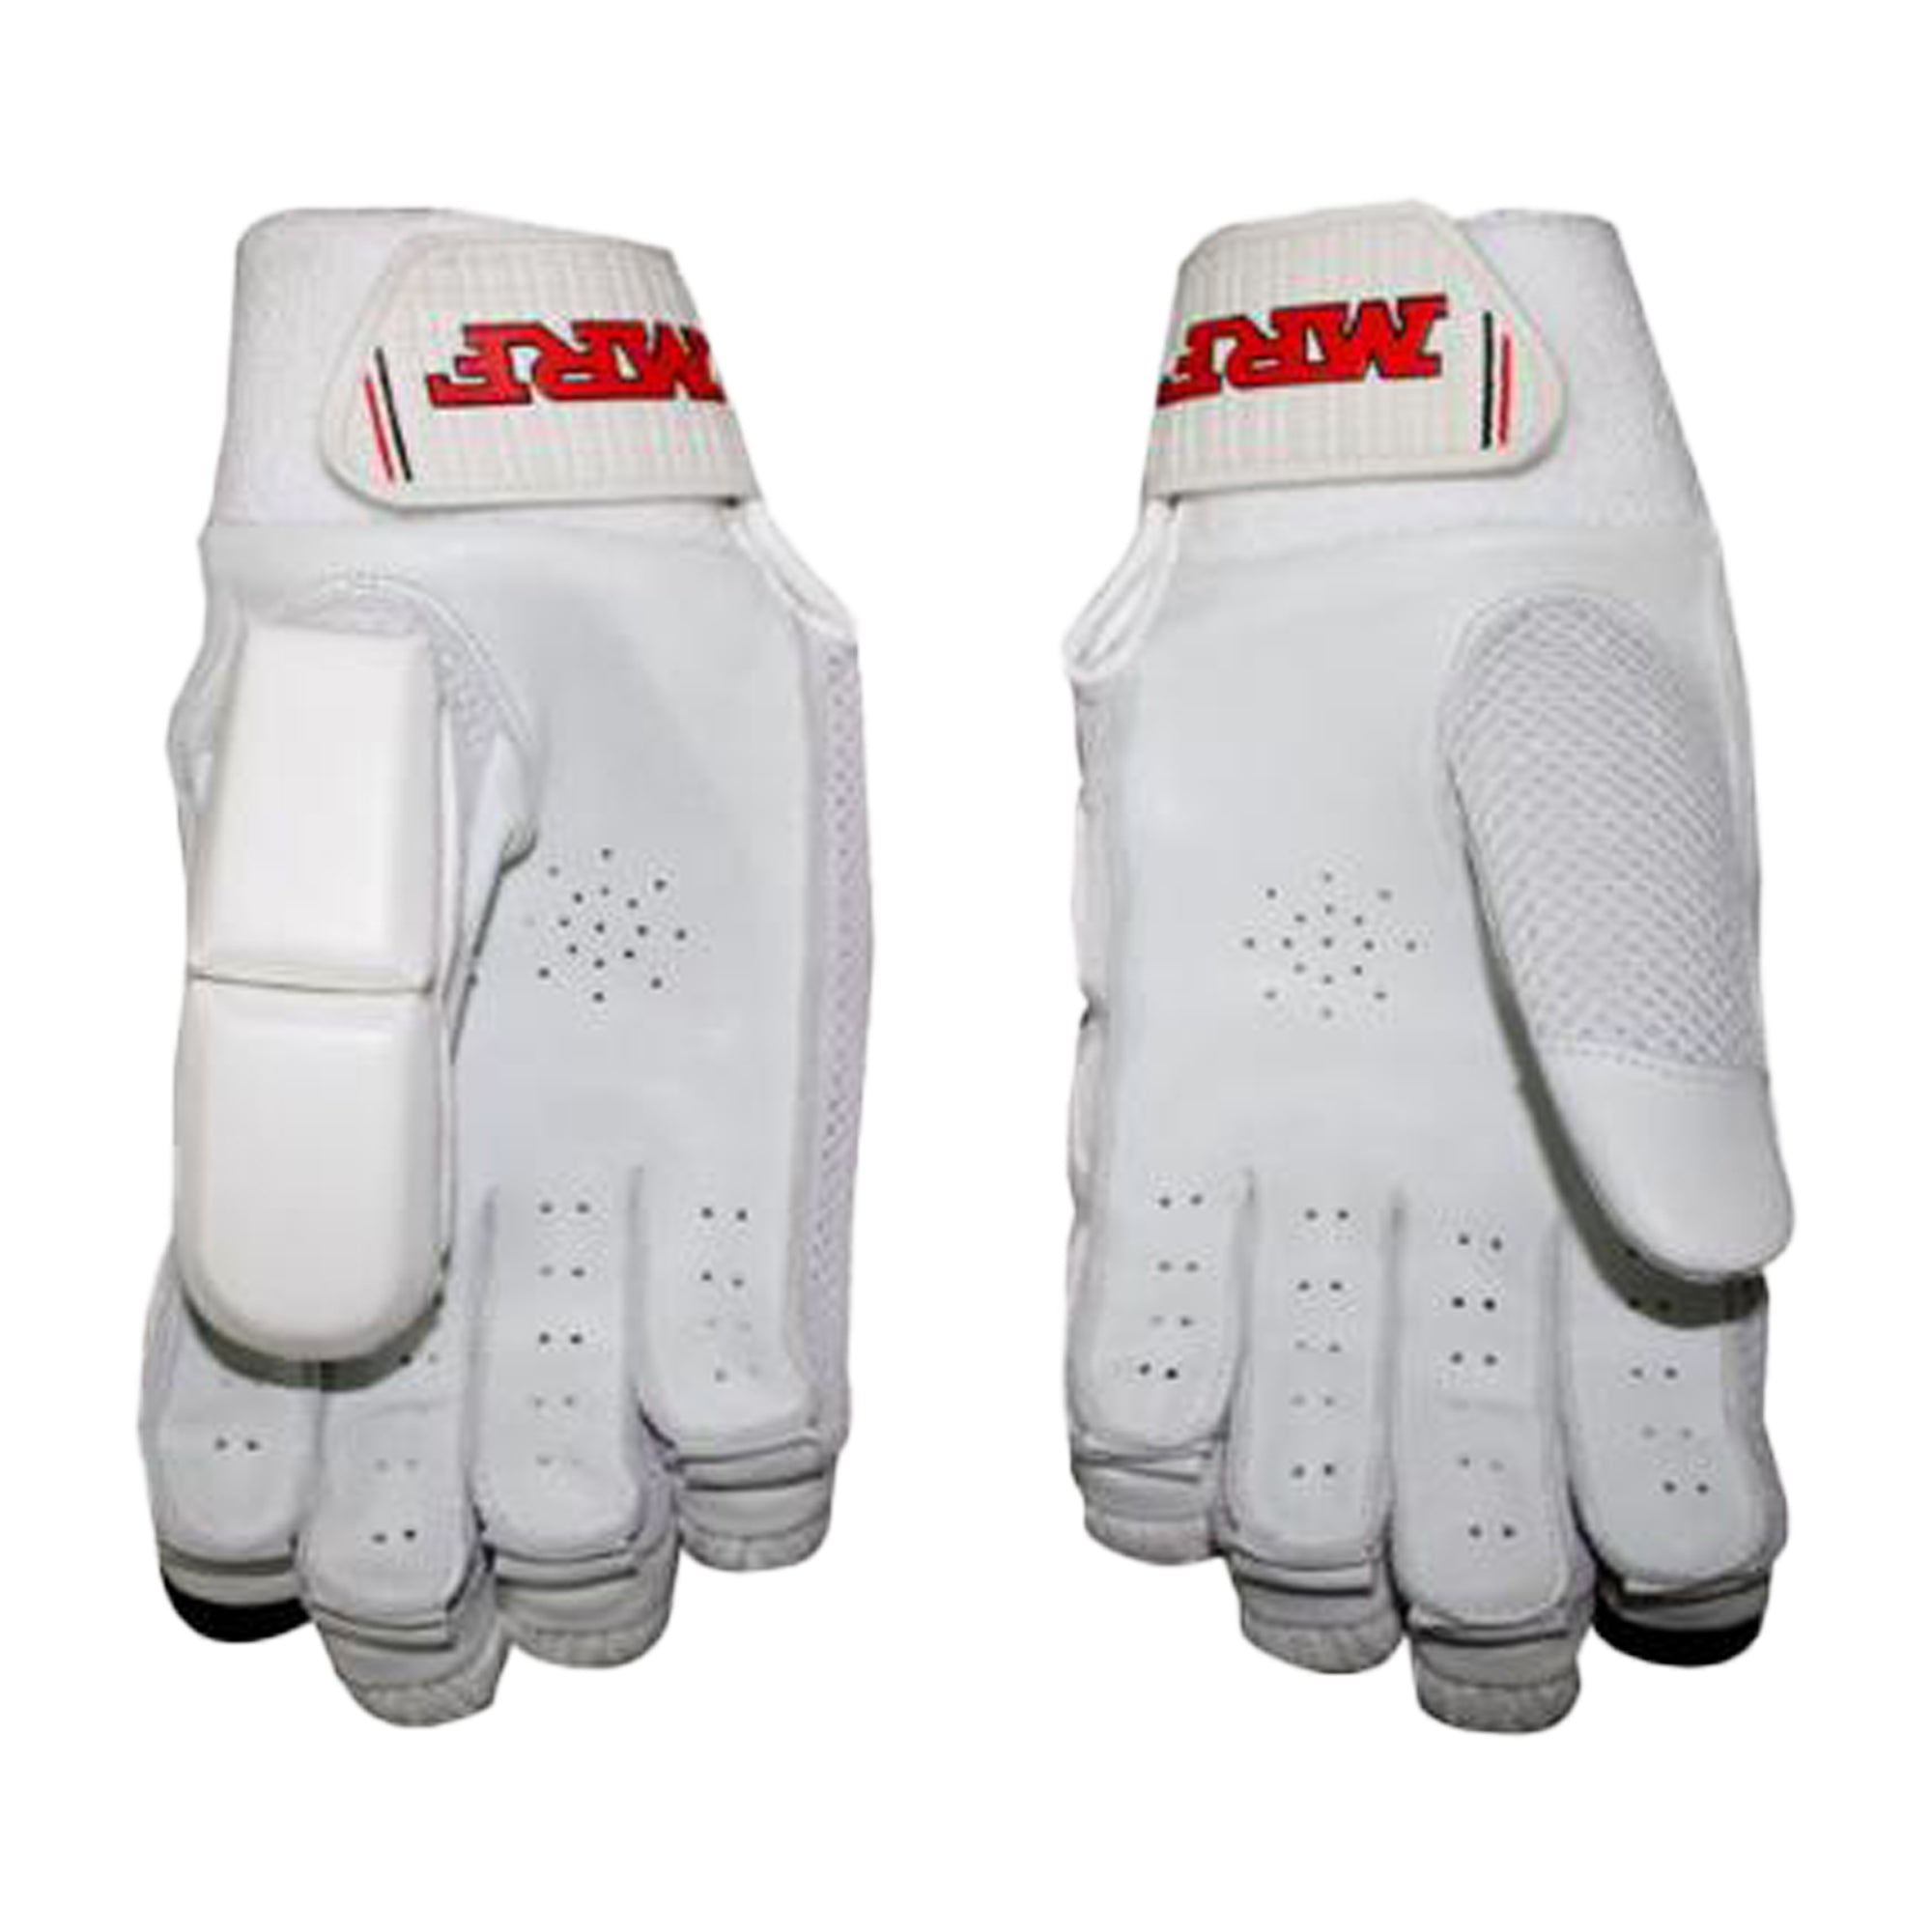 MRF Legend Vk 18 1.0 Cricket Batting Gloves